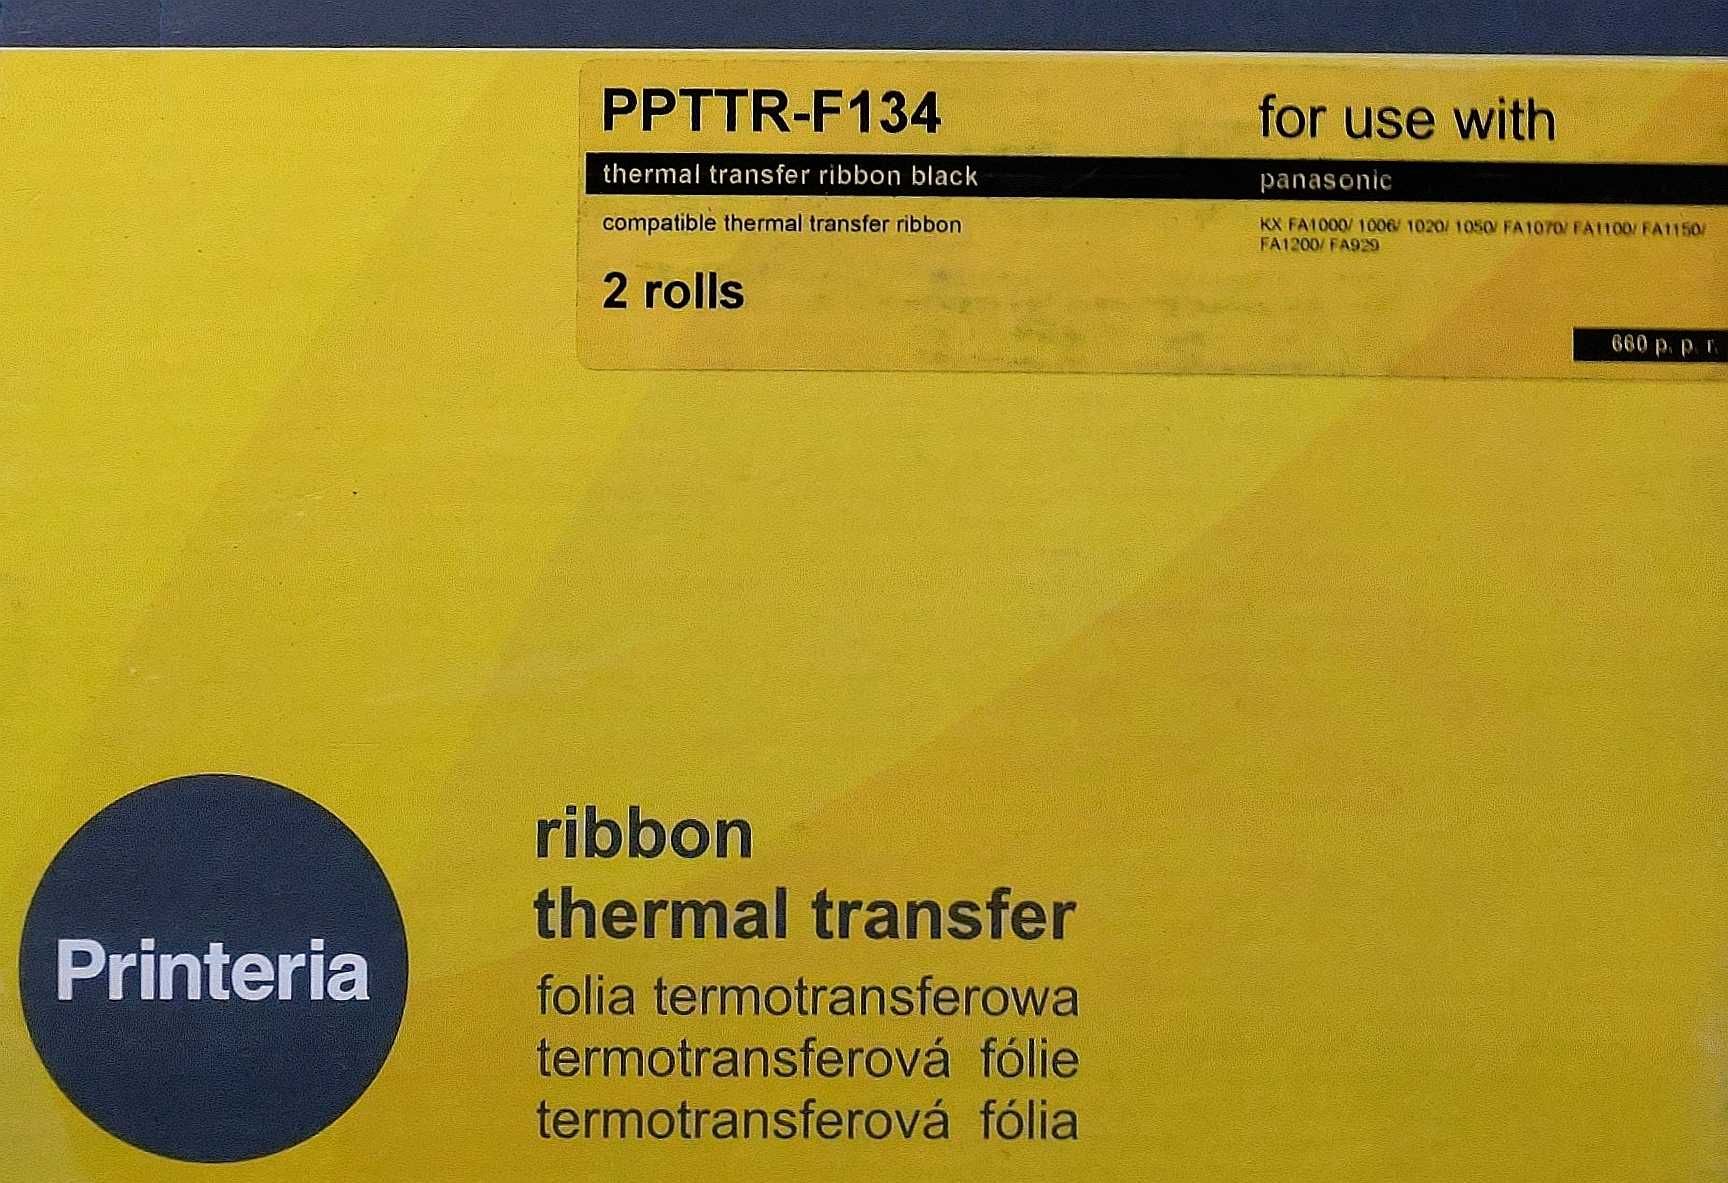 Nowa folia termotransferowa Printeria KX-FA134 do faksów Panasonic